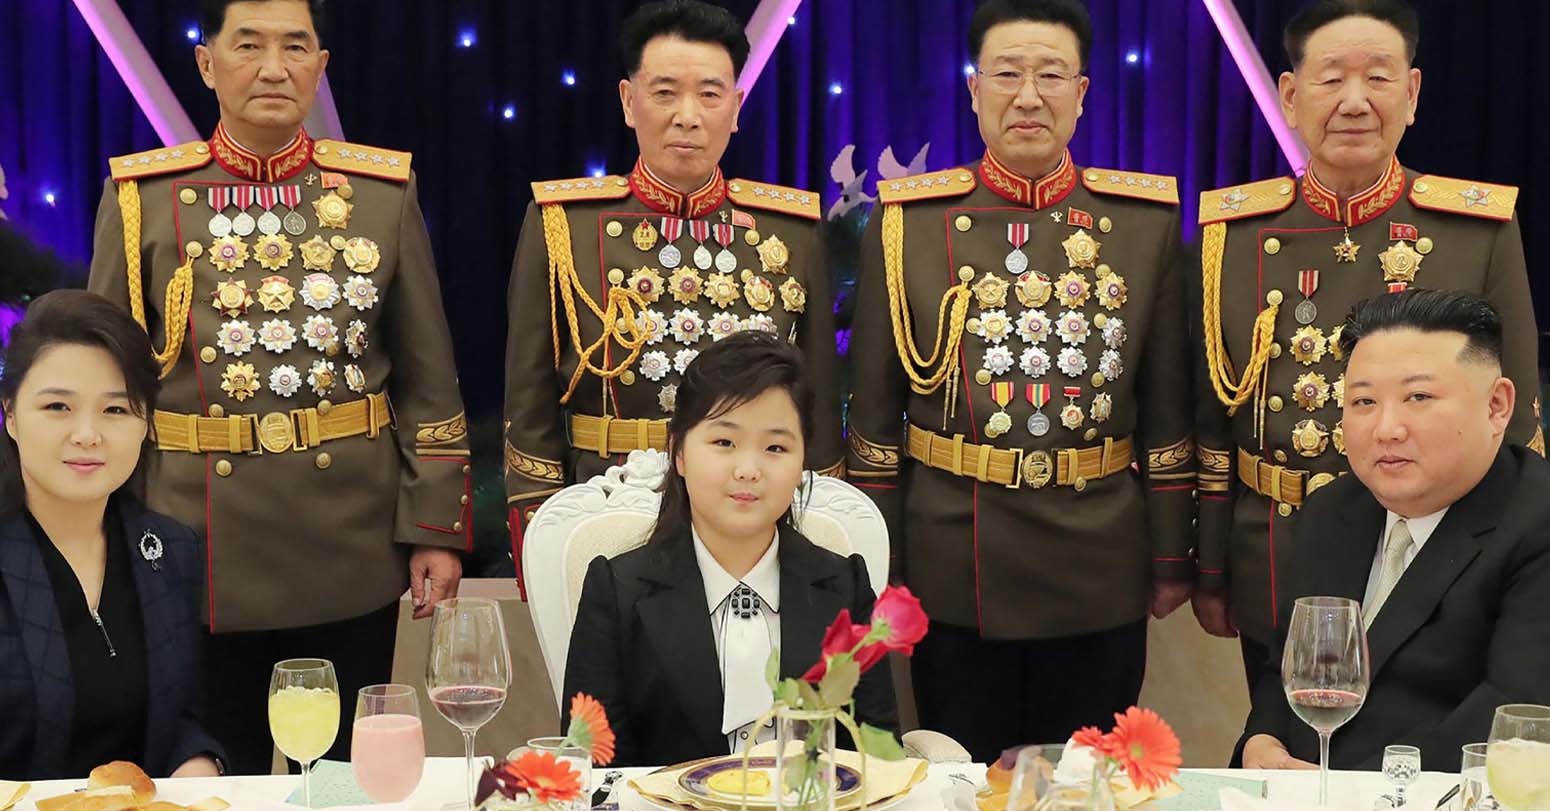 Ju-ae’s public appearances suggest she will succeed Kim Jong-un!